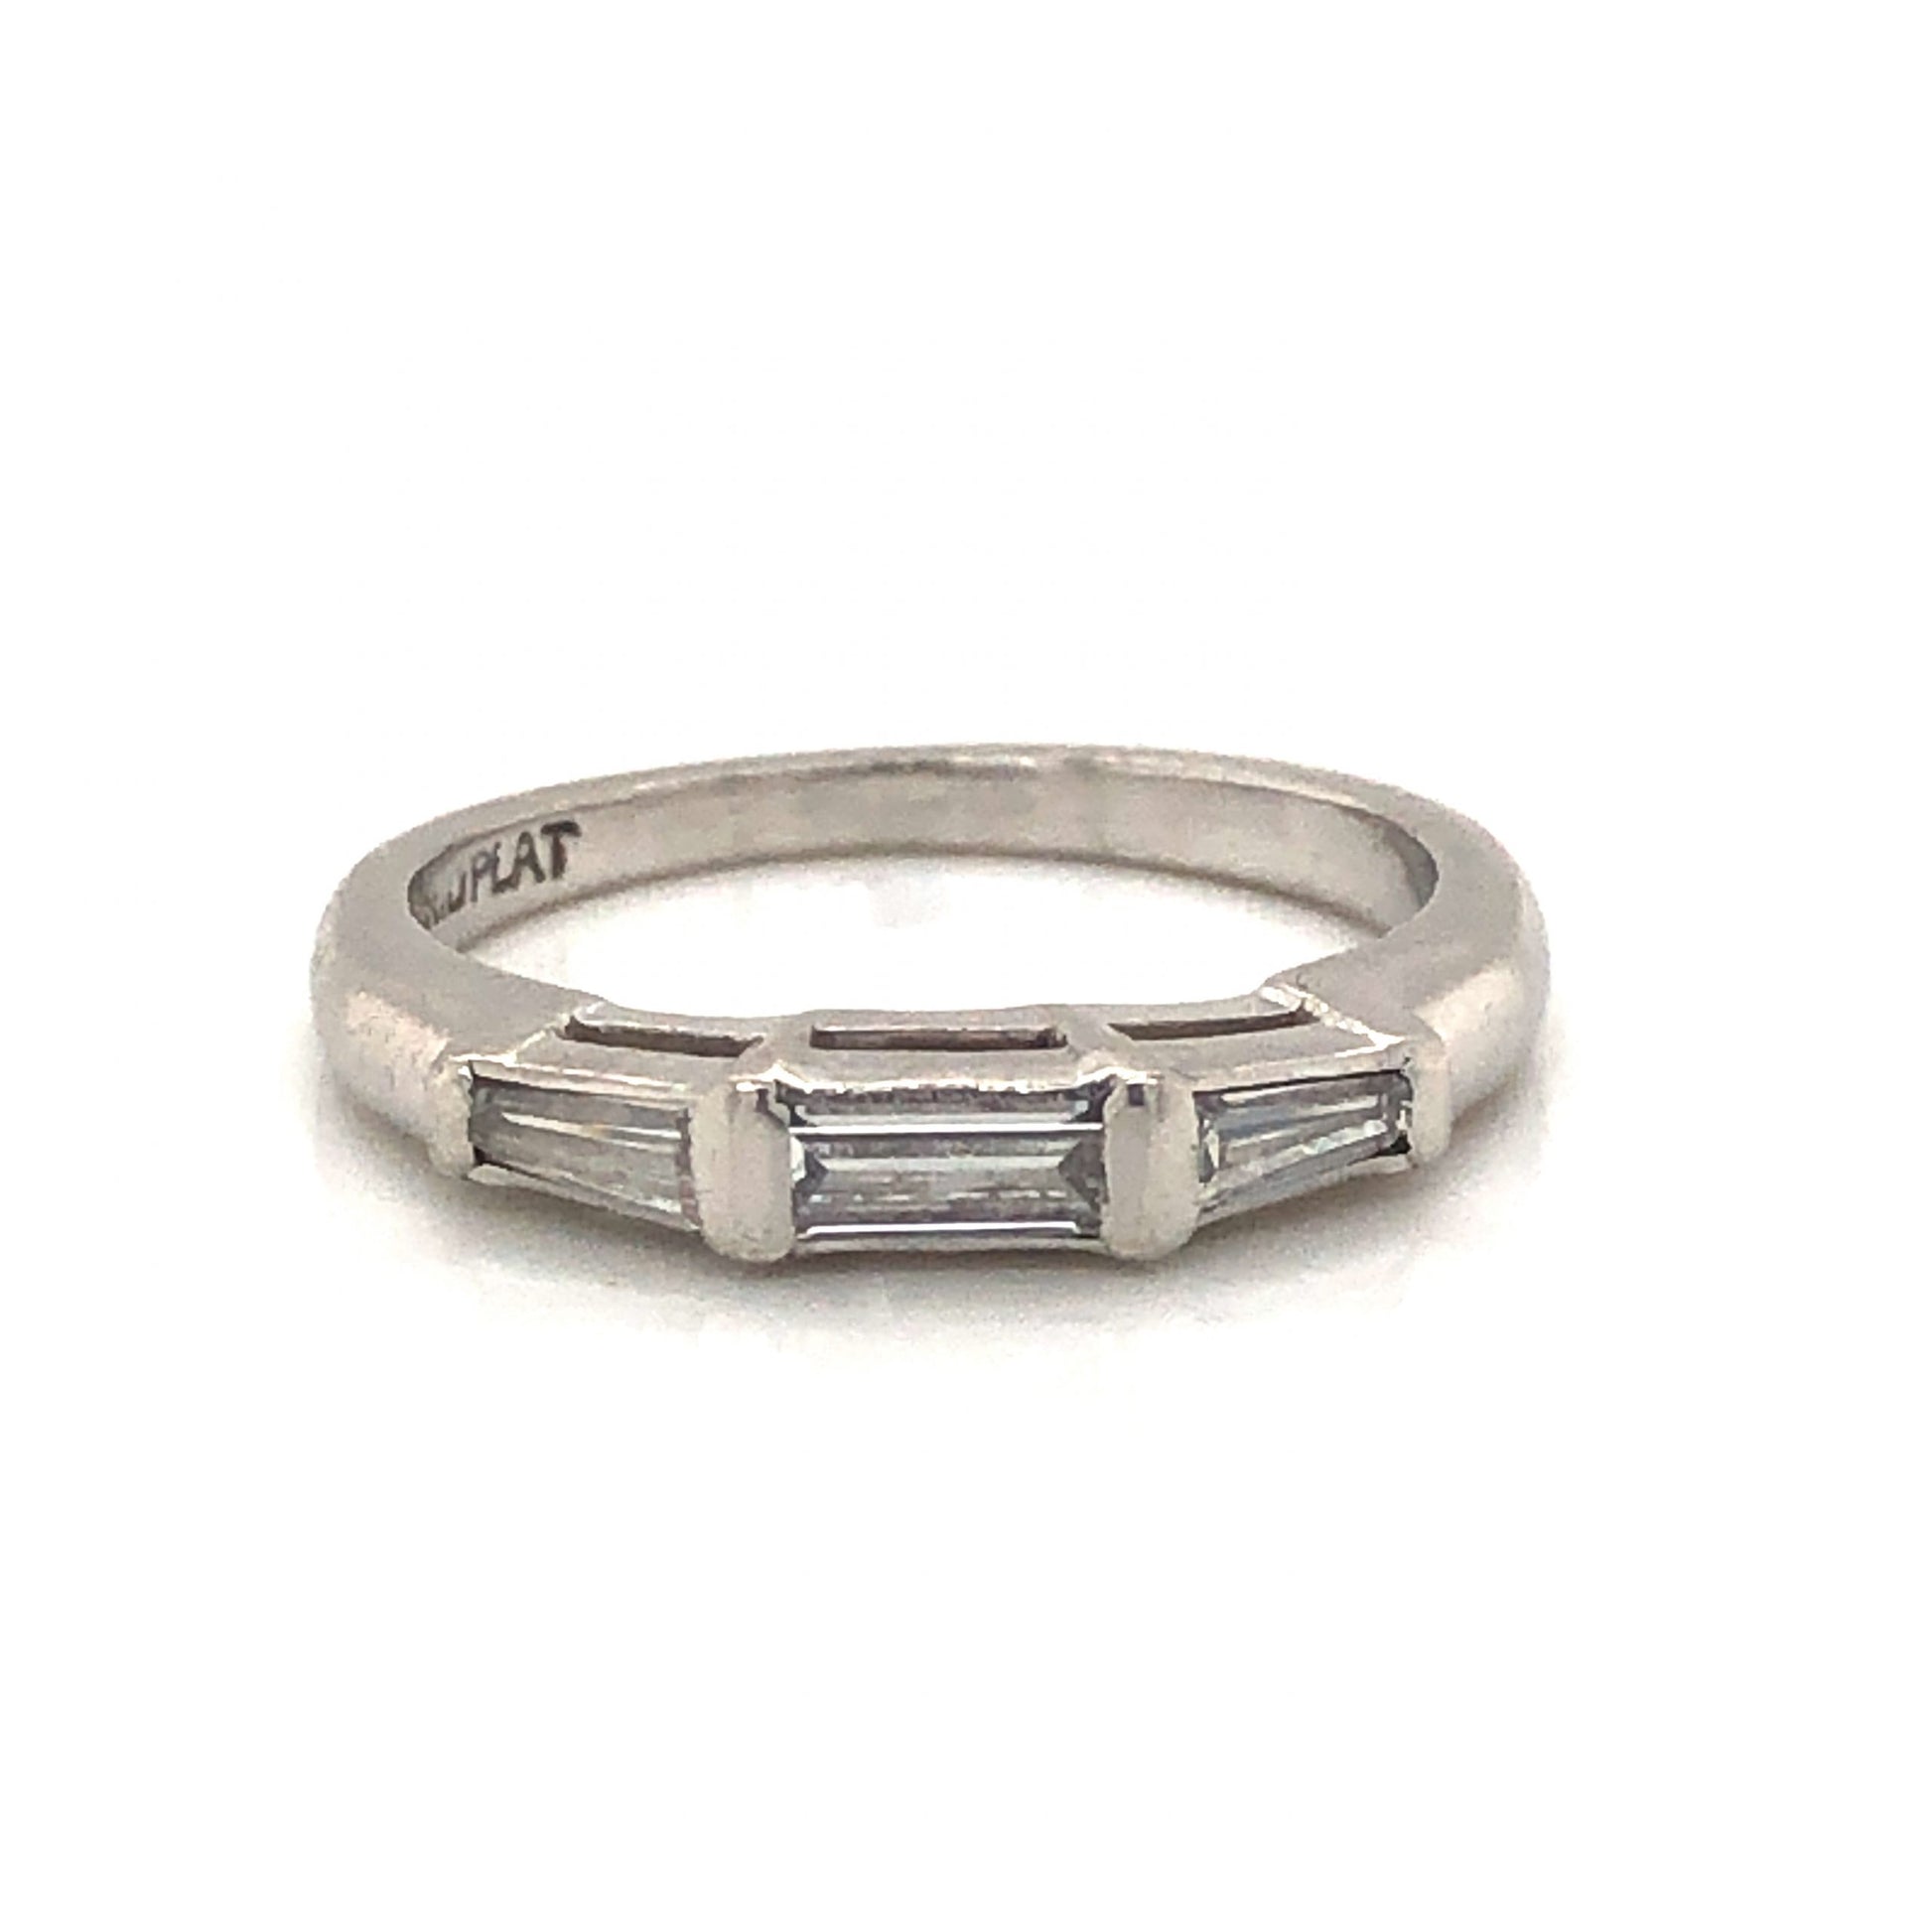 Art Deco Baguette Diamond Wedding Band in PlatinumComposition: Platinum Ring Size: 3.5 Total Diamond Weight: .22ct Total Gram Weight: 2.9 g Inscription: 10% IRID PLAT
      